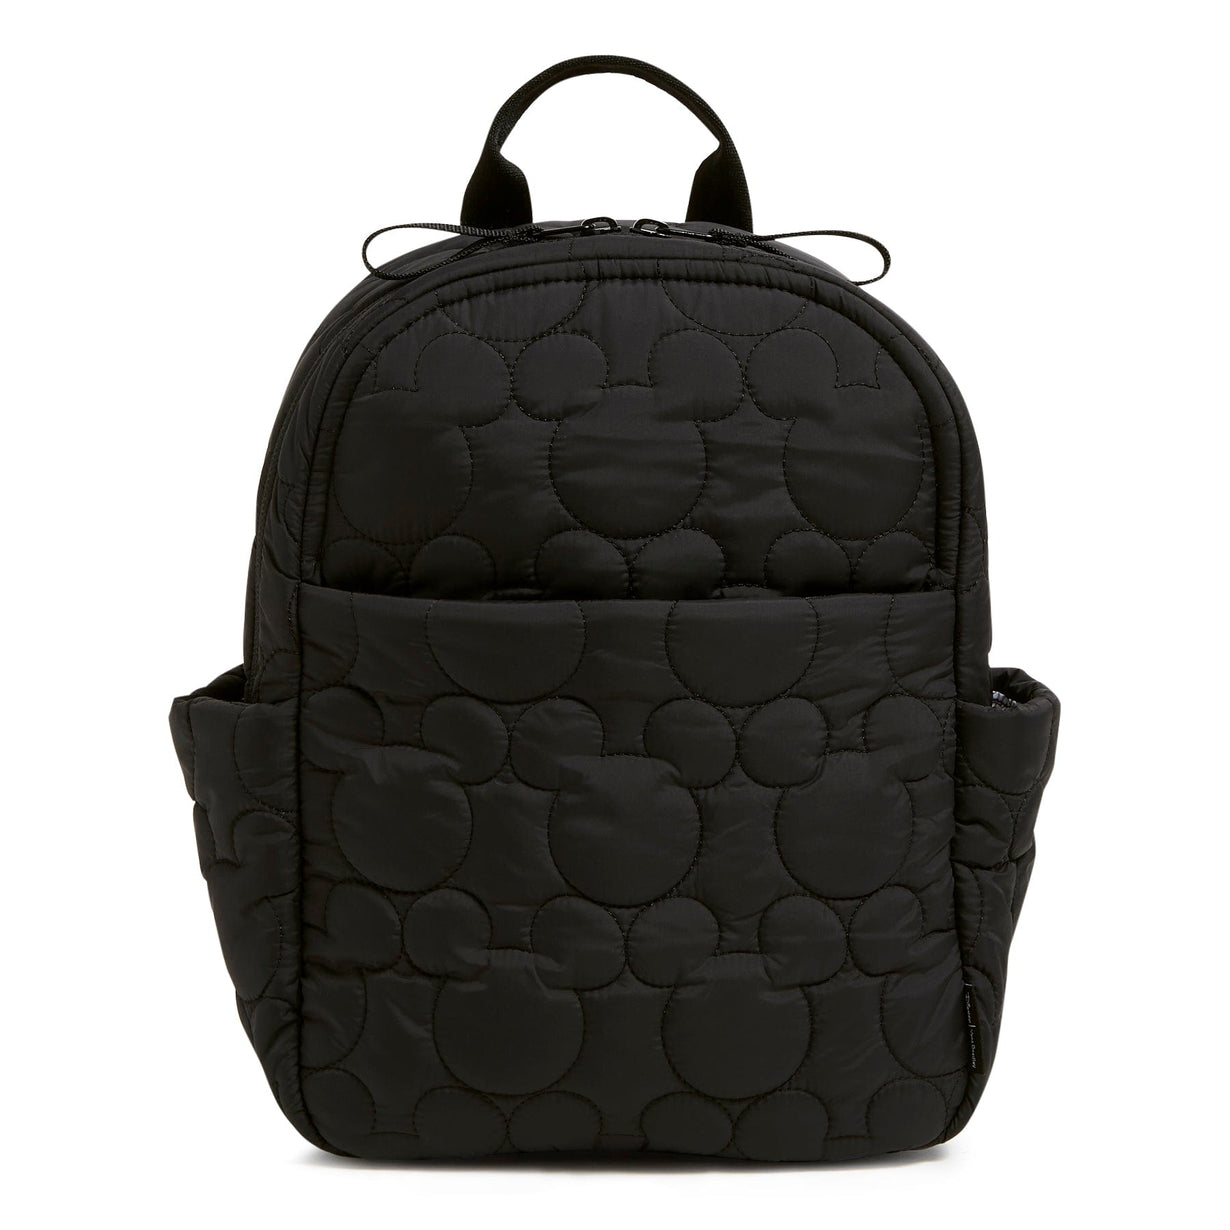 Disney Small Backpack - Recycled Nylon | Vera Bradley